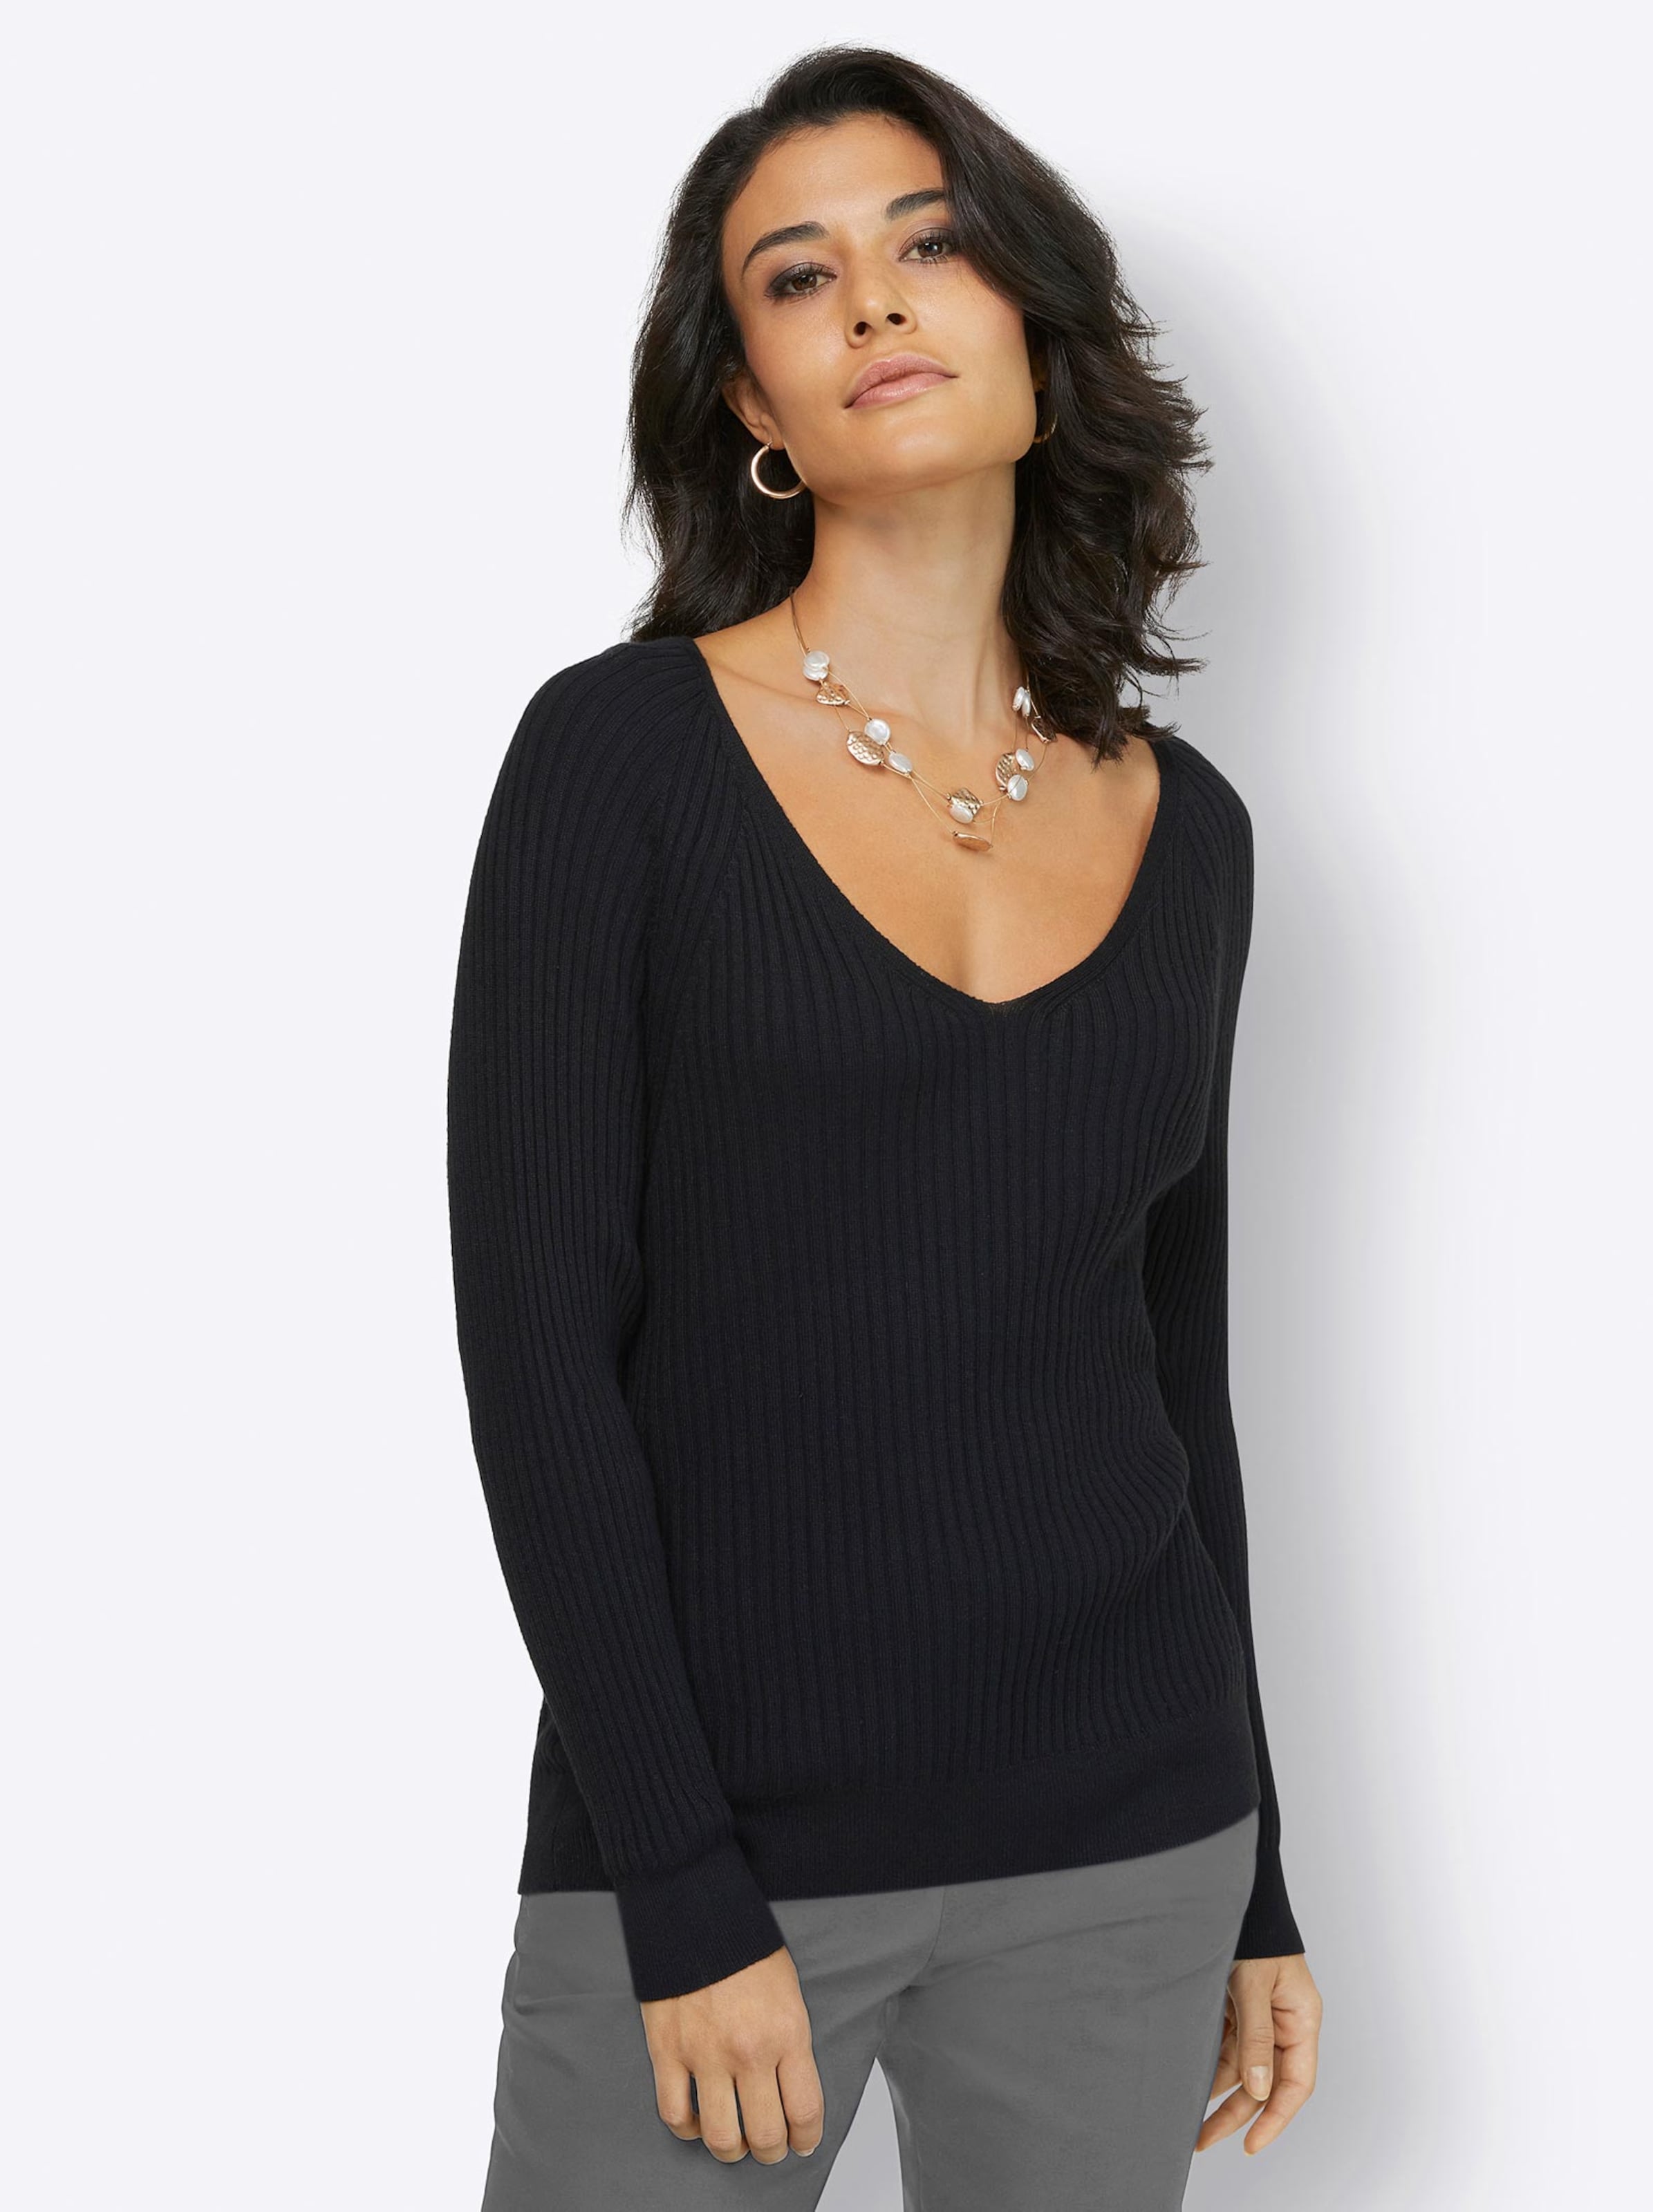 Damenmode Pullover V-Ausschnitt-Pullover in schwarz 